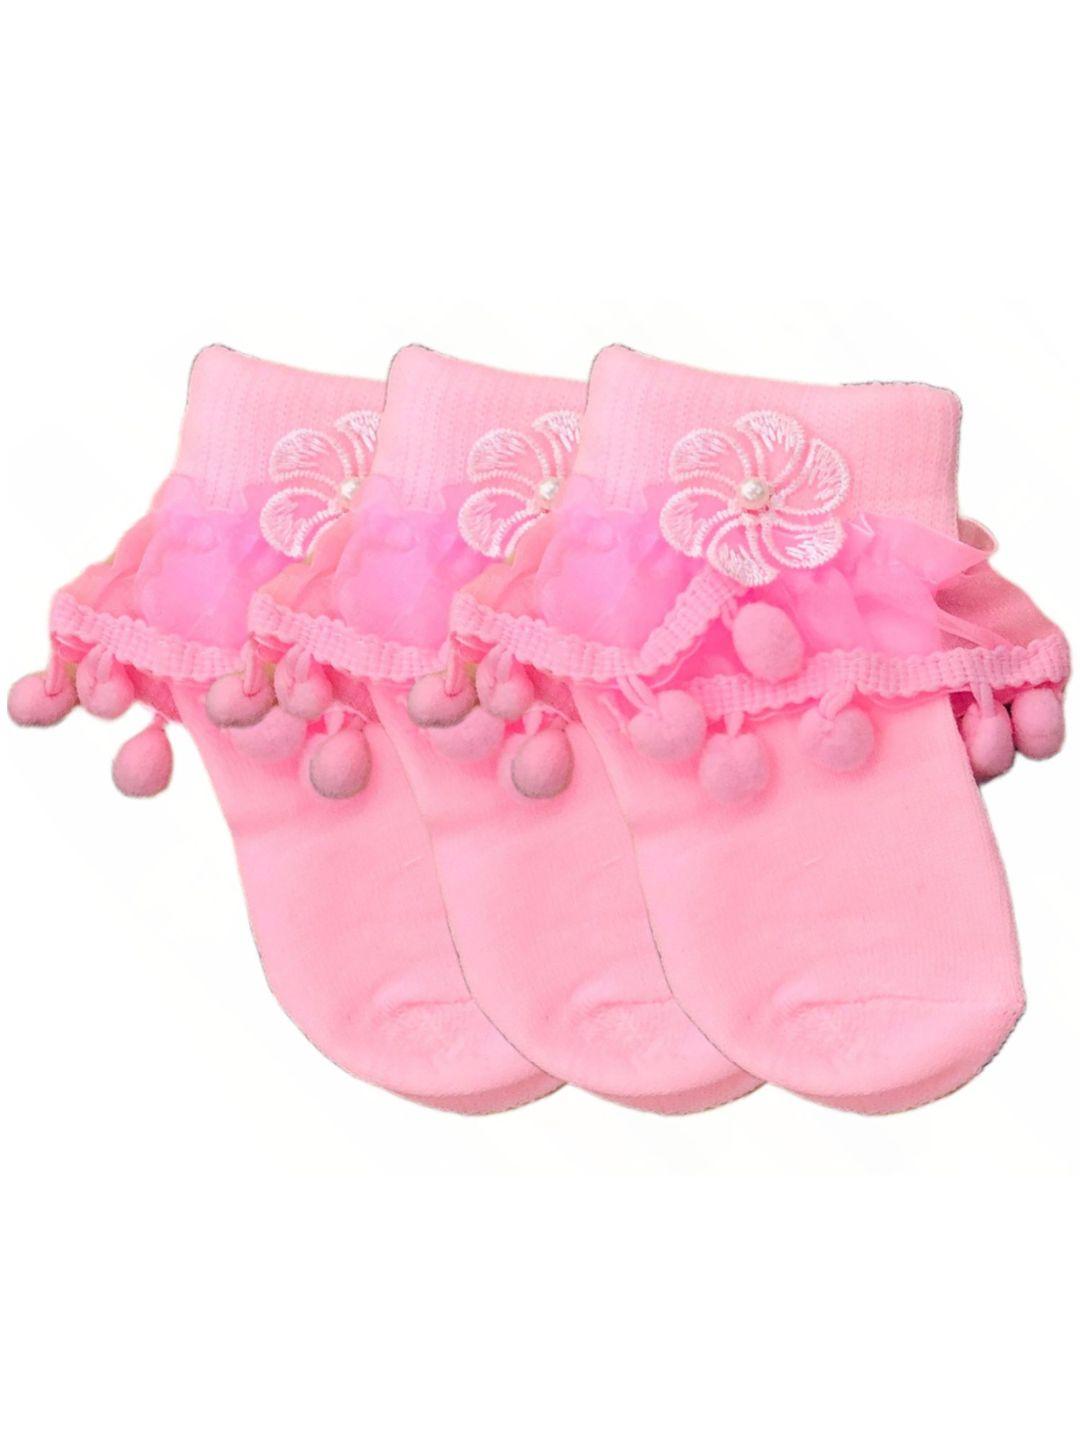 n2s next2skin infant girls pack of 3 pink super combed cotton above ankle-length socks